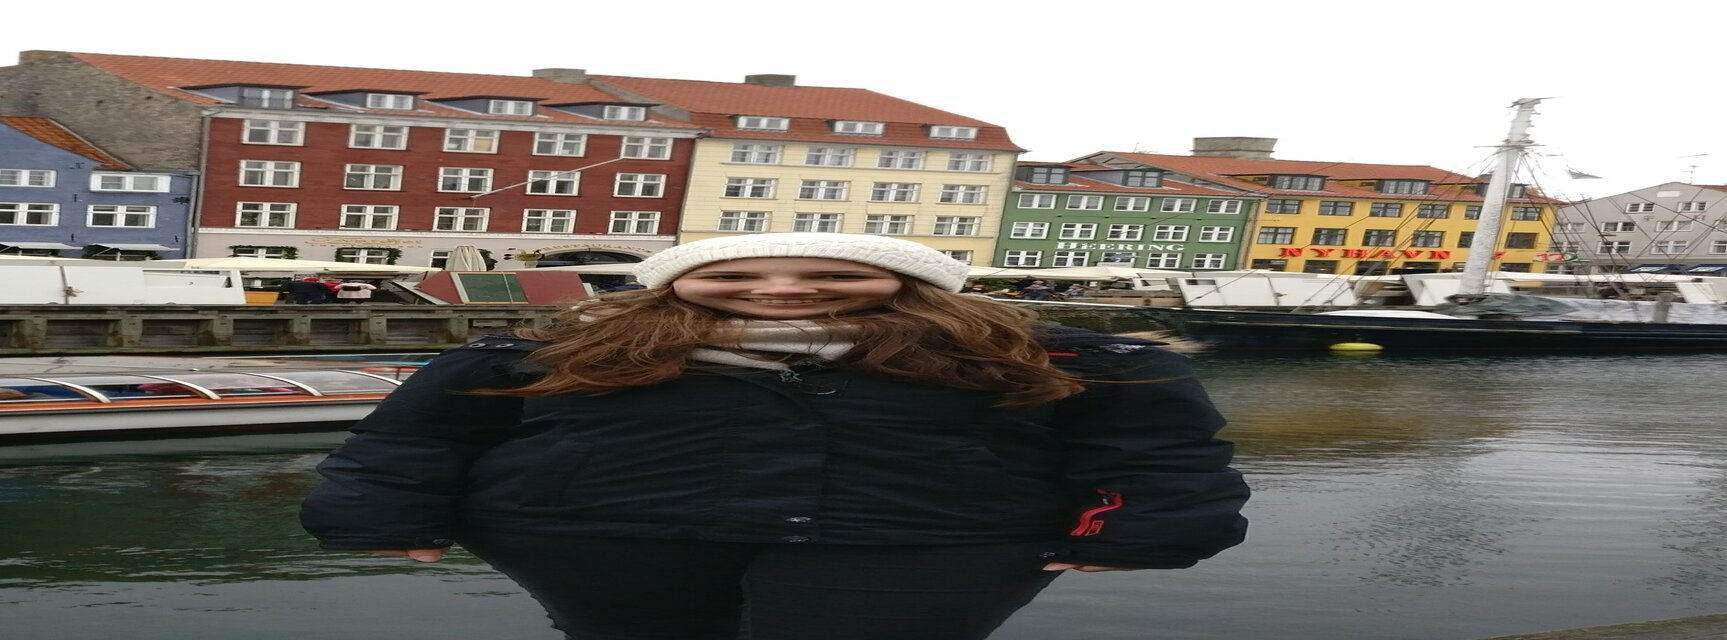 Kristin in Denmark